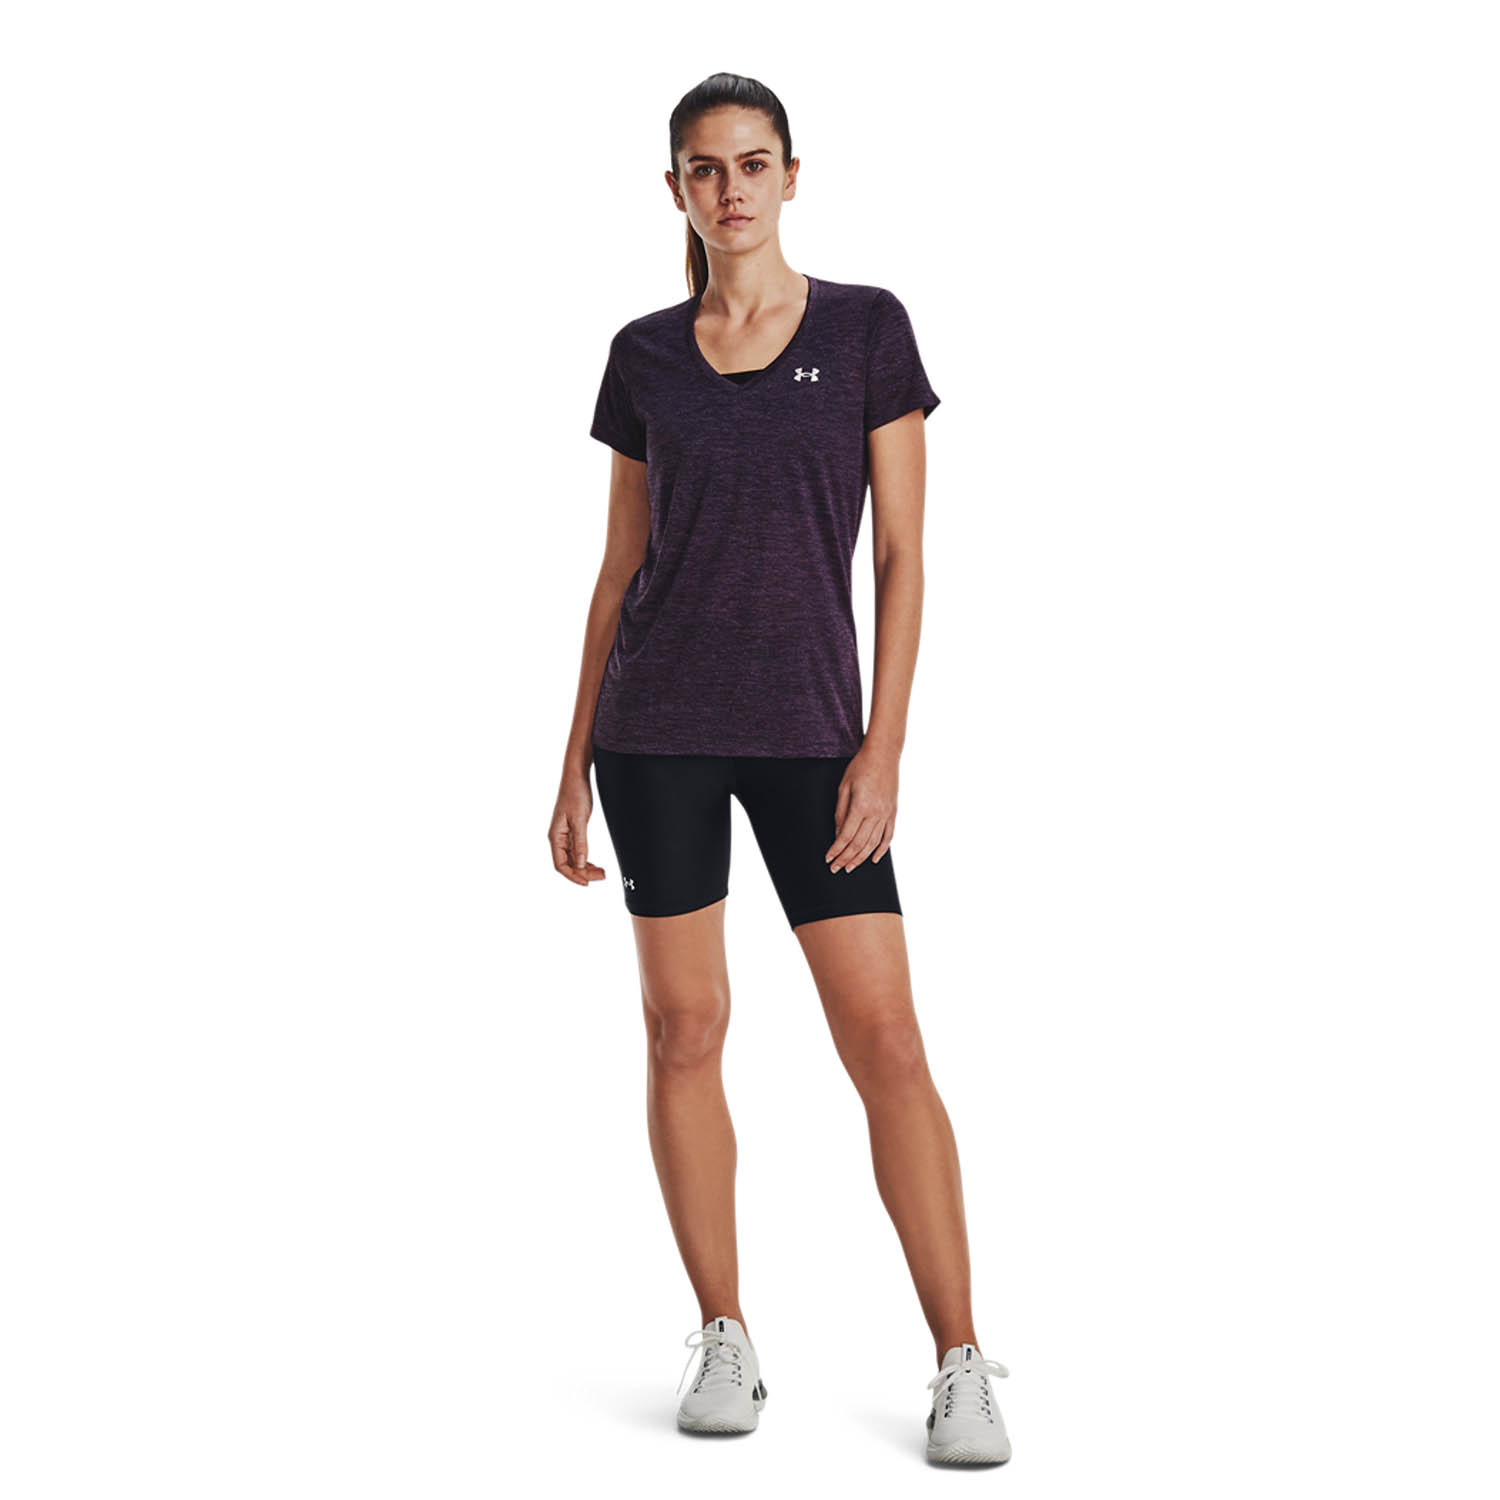 Under Armour Tech Twist Women's Tennis T-Shirt - Tux Purple